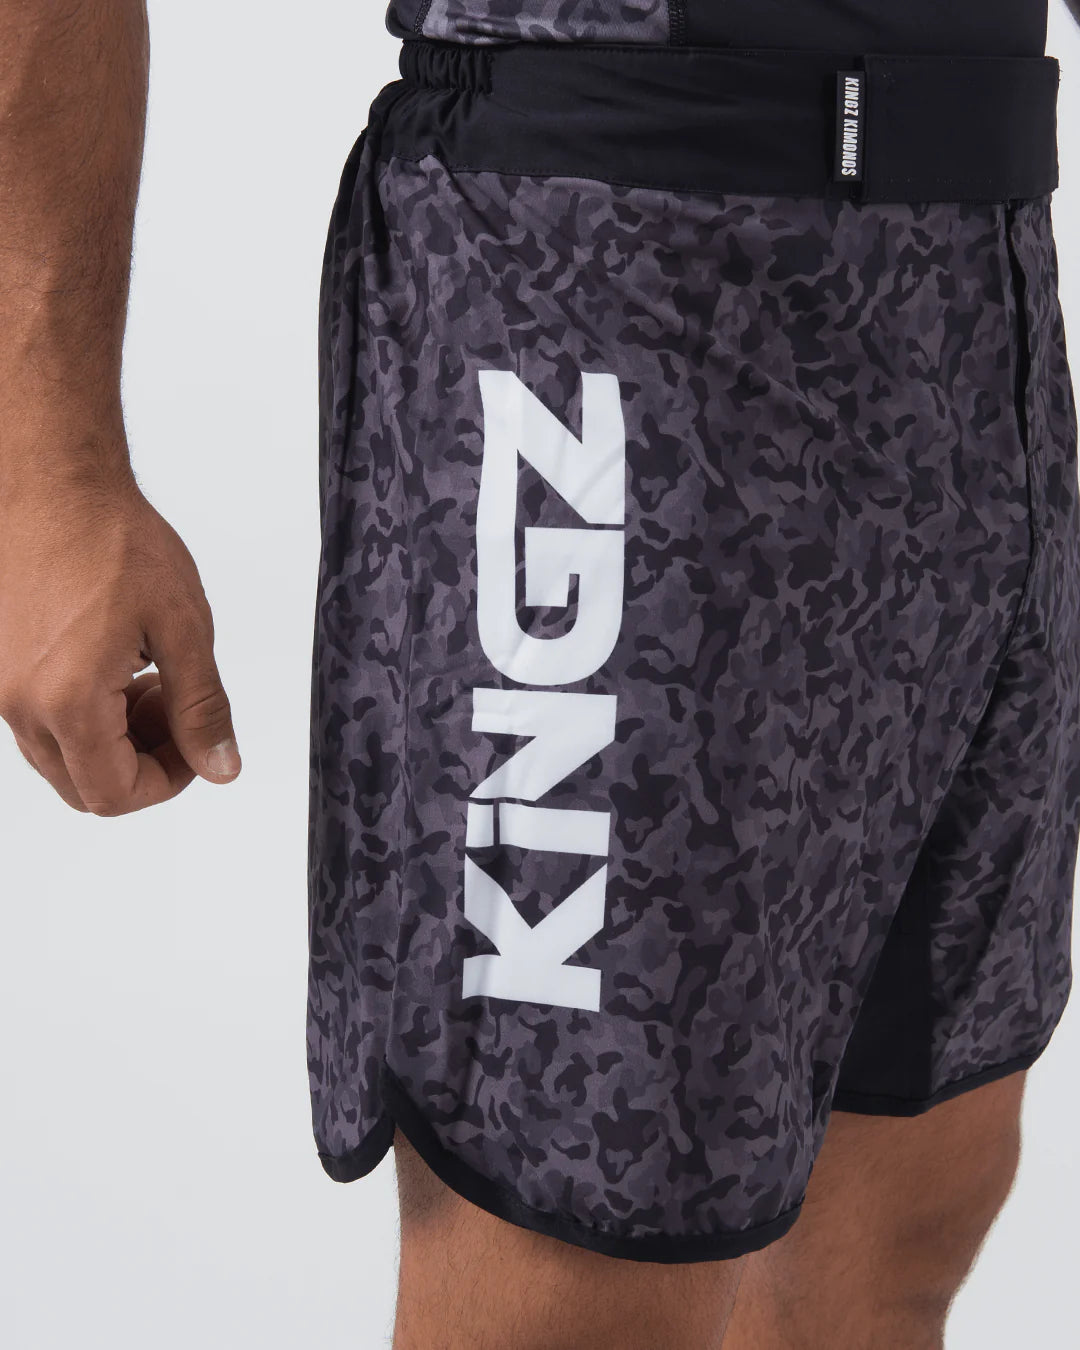 Kingz Night Camo Shorts